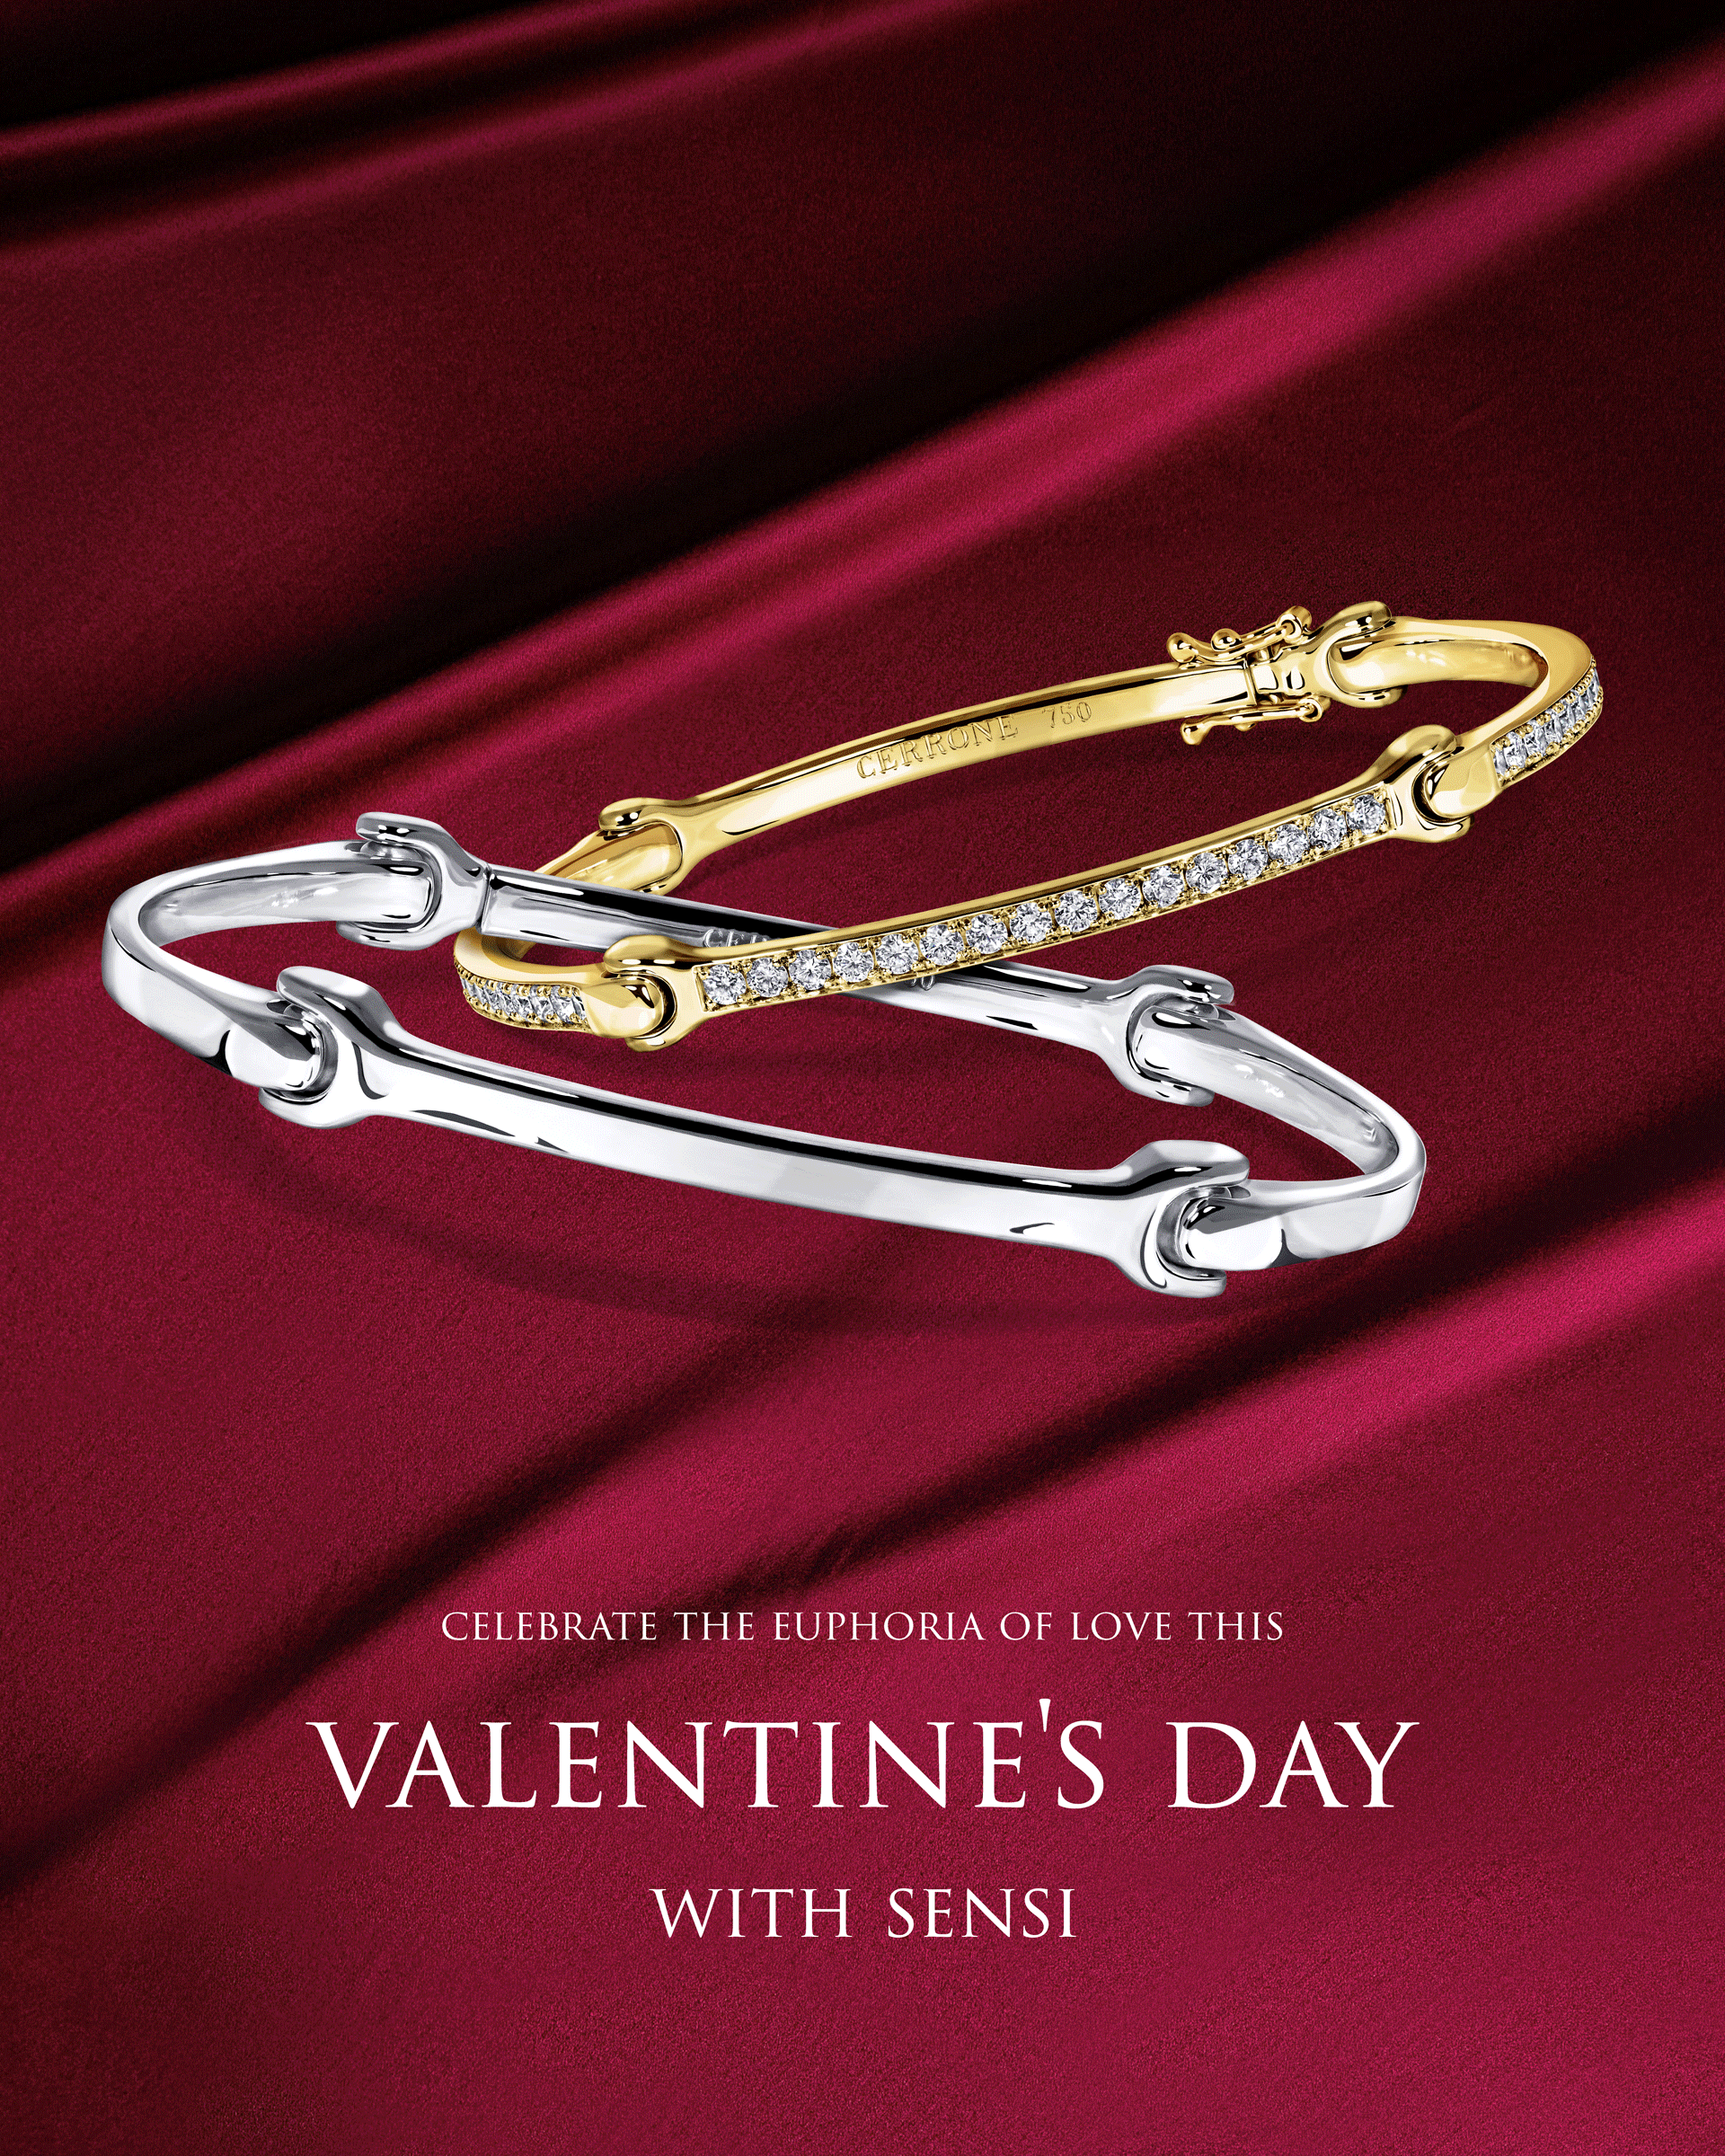 Celebrate Love this Valentine's Day - SENSI bracelet collection